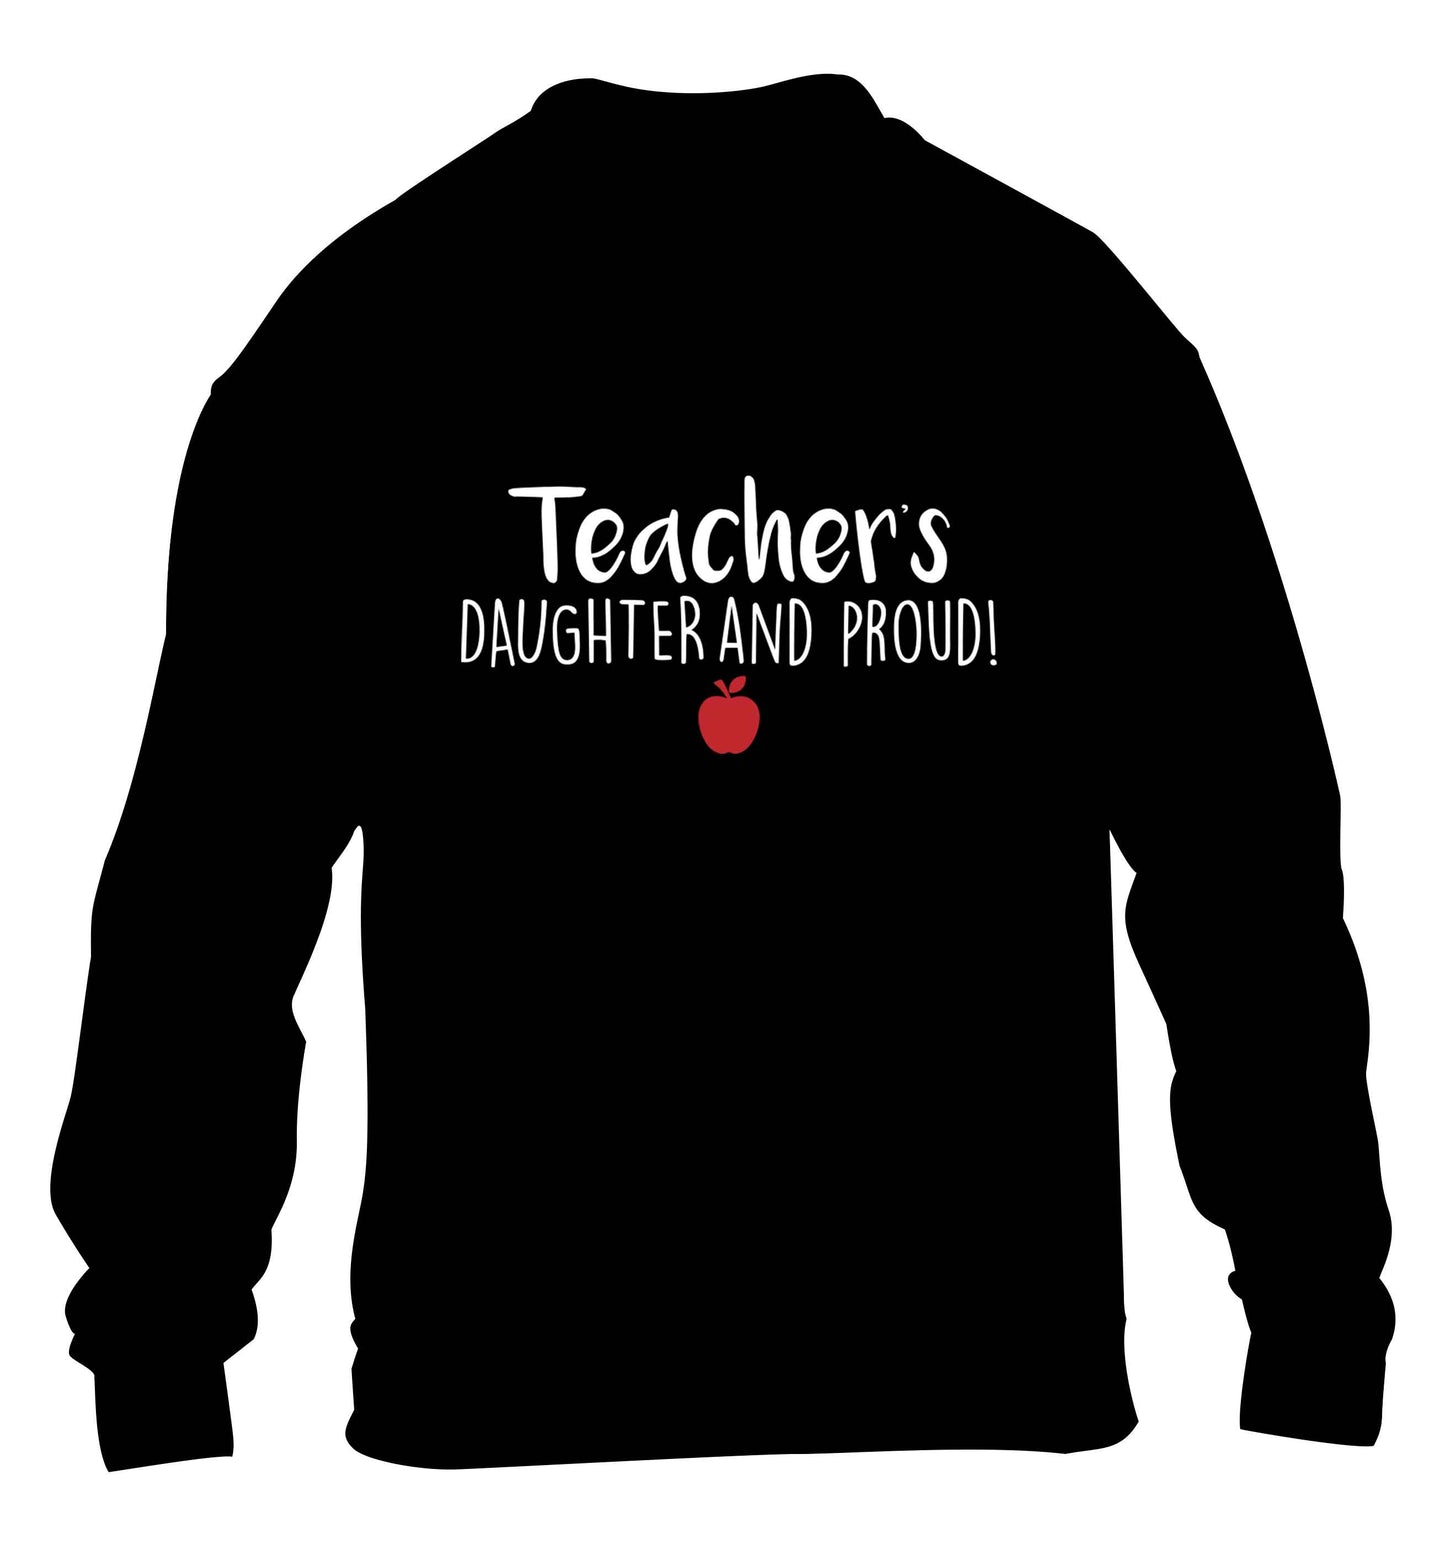 Teachers daughter and proud children's black sweater 12-13 Years